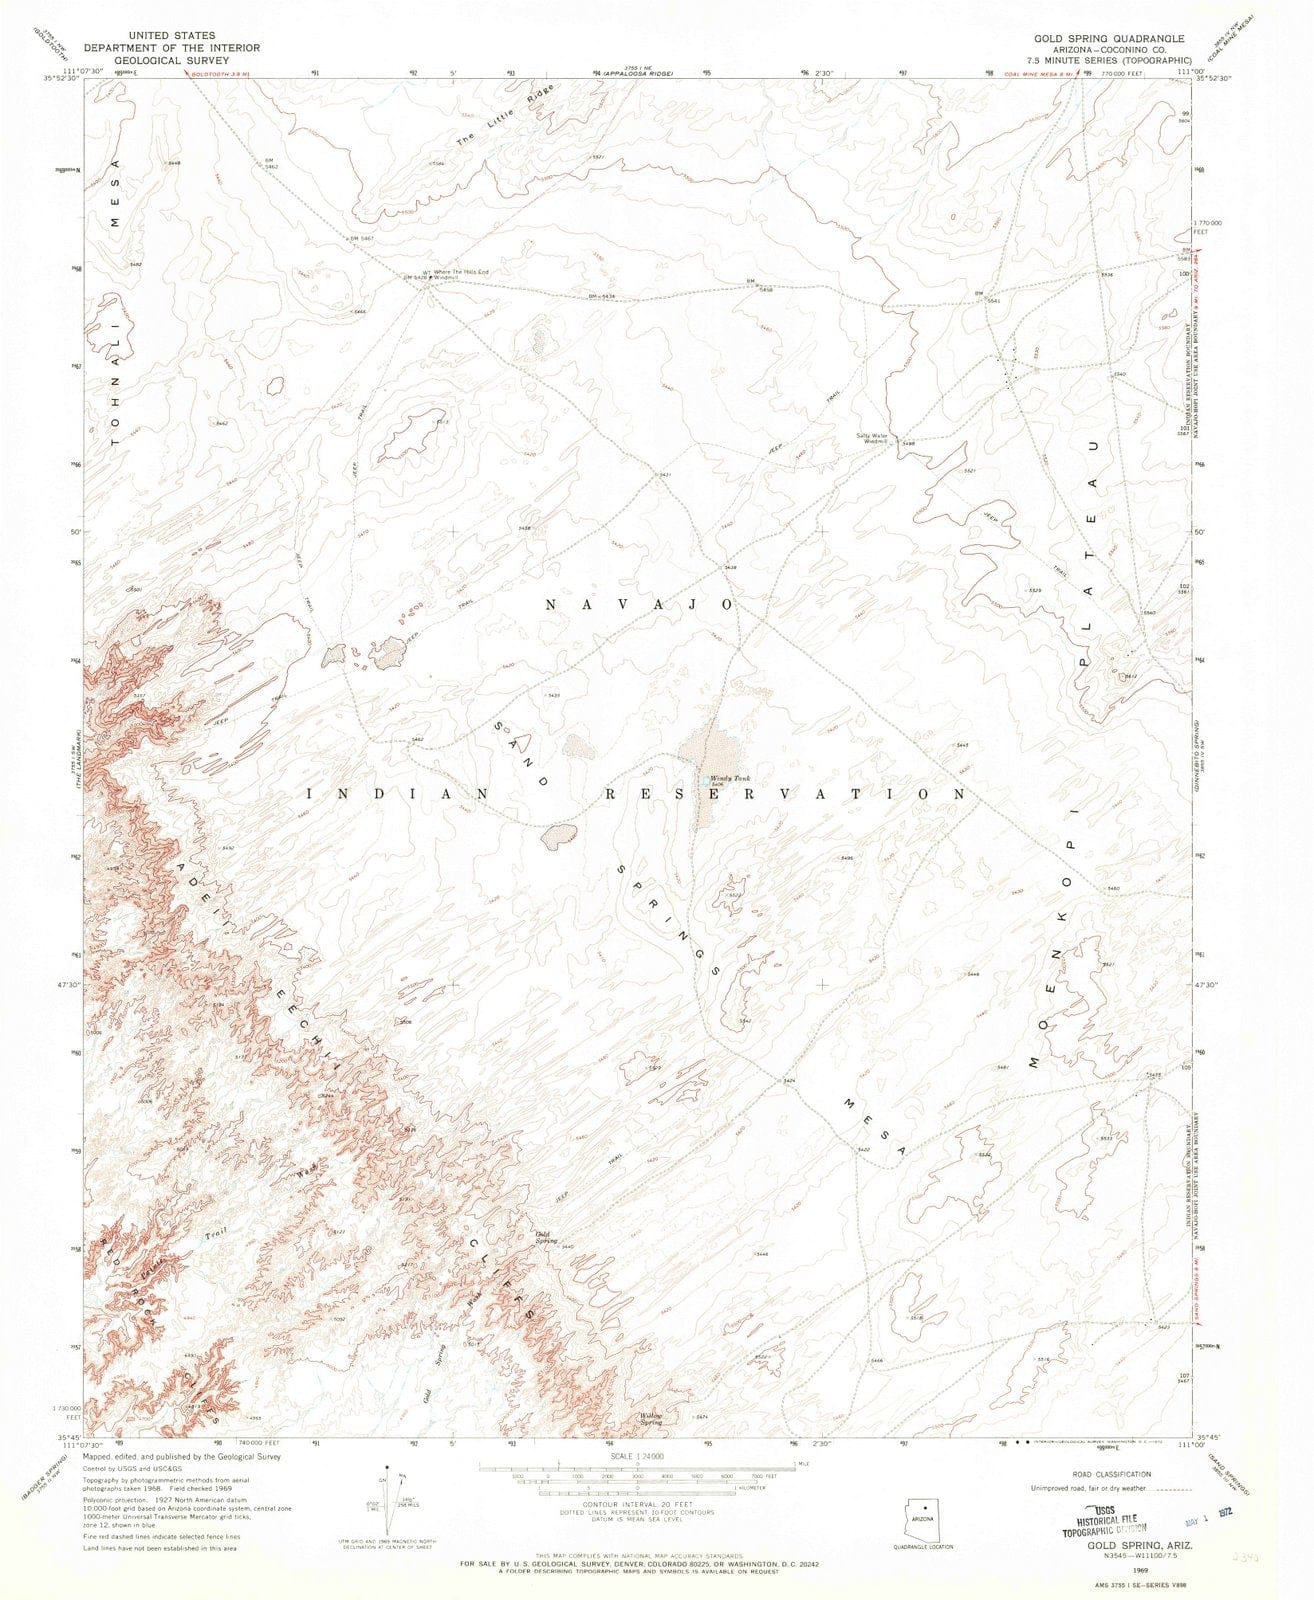 1969 Gold Spring, AZ - Arizona - USGS Topographic Map